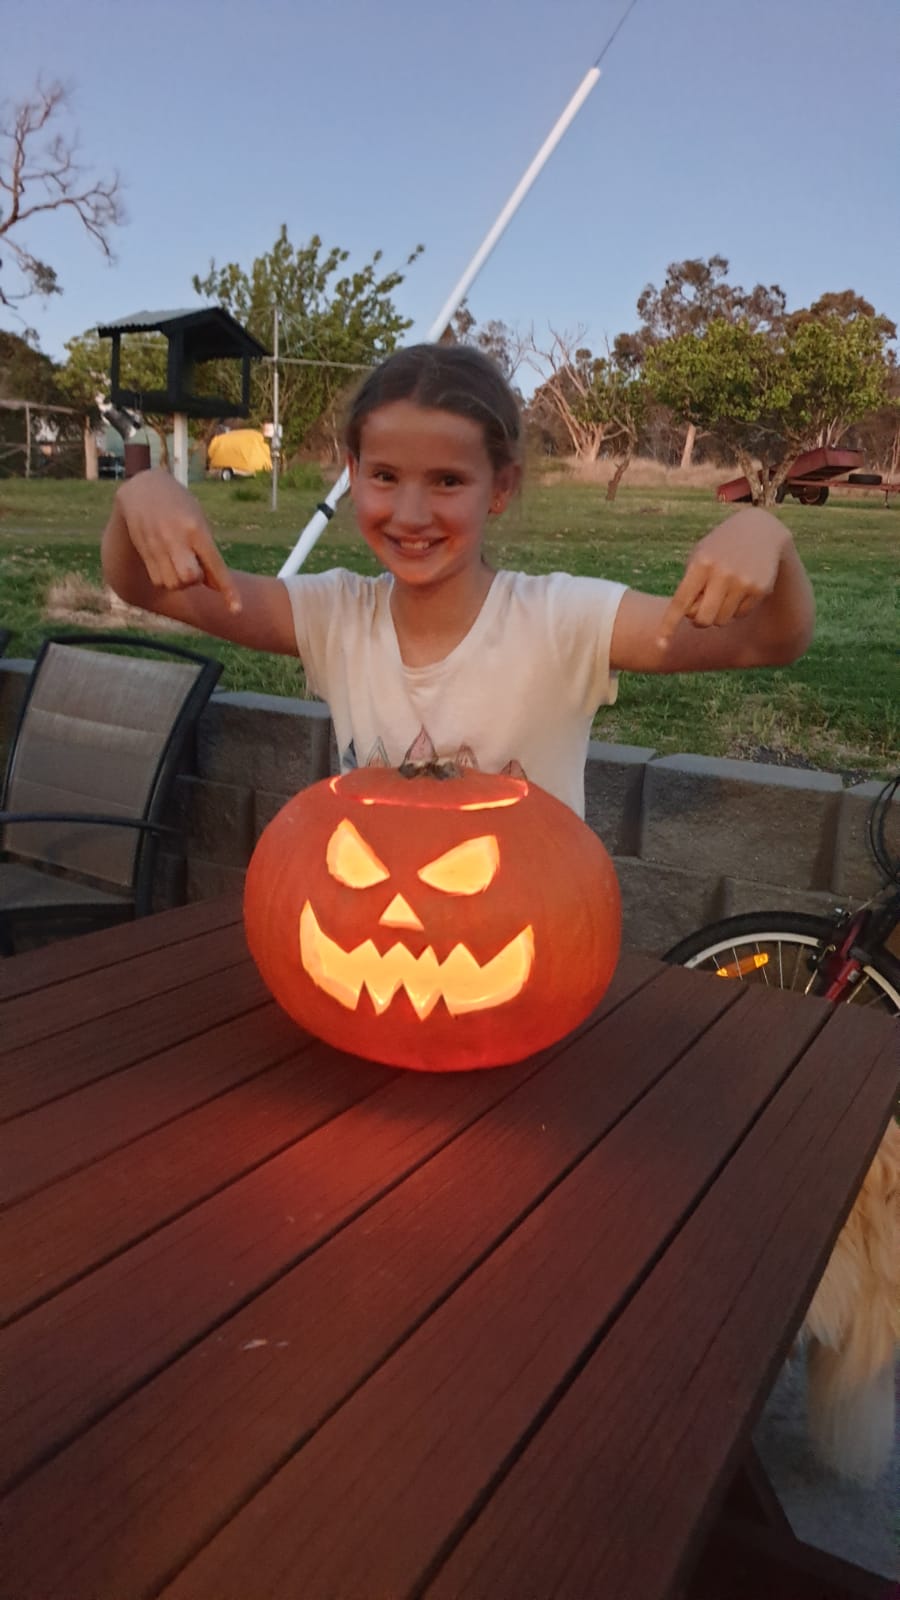 Kara Johnson with the pumpkin she carved.